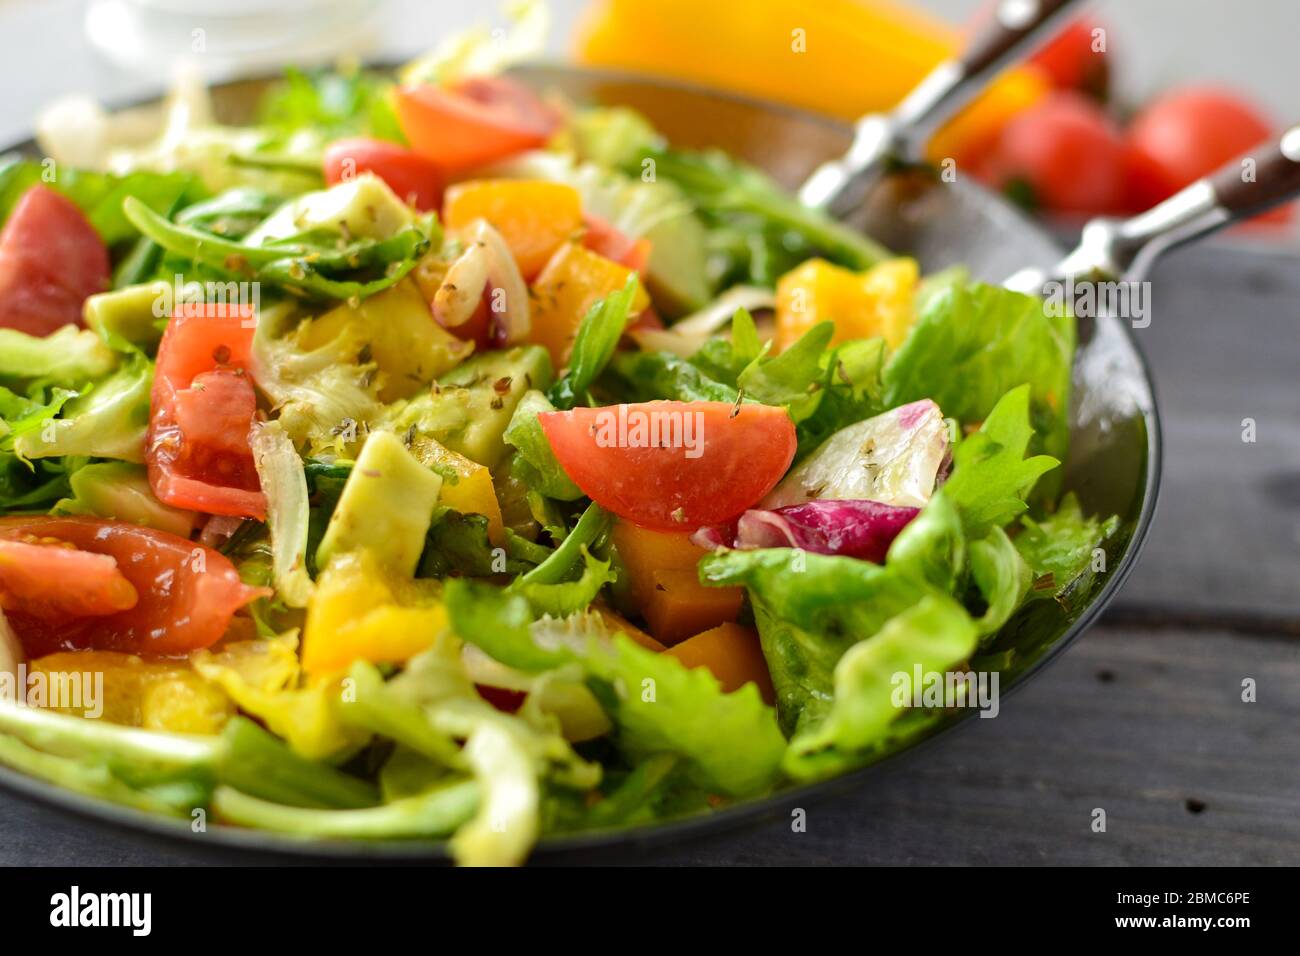 Healthy vegan food. Vegetable salad dressing, tomatoes, bell peppers, avocado. Close-up. Vegetarianism and veganism. Stock Photo